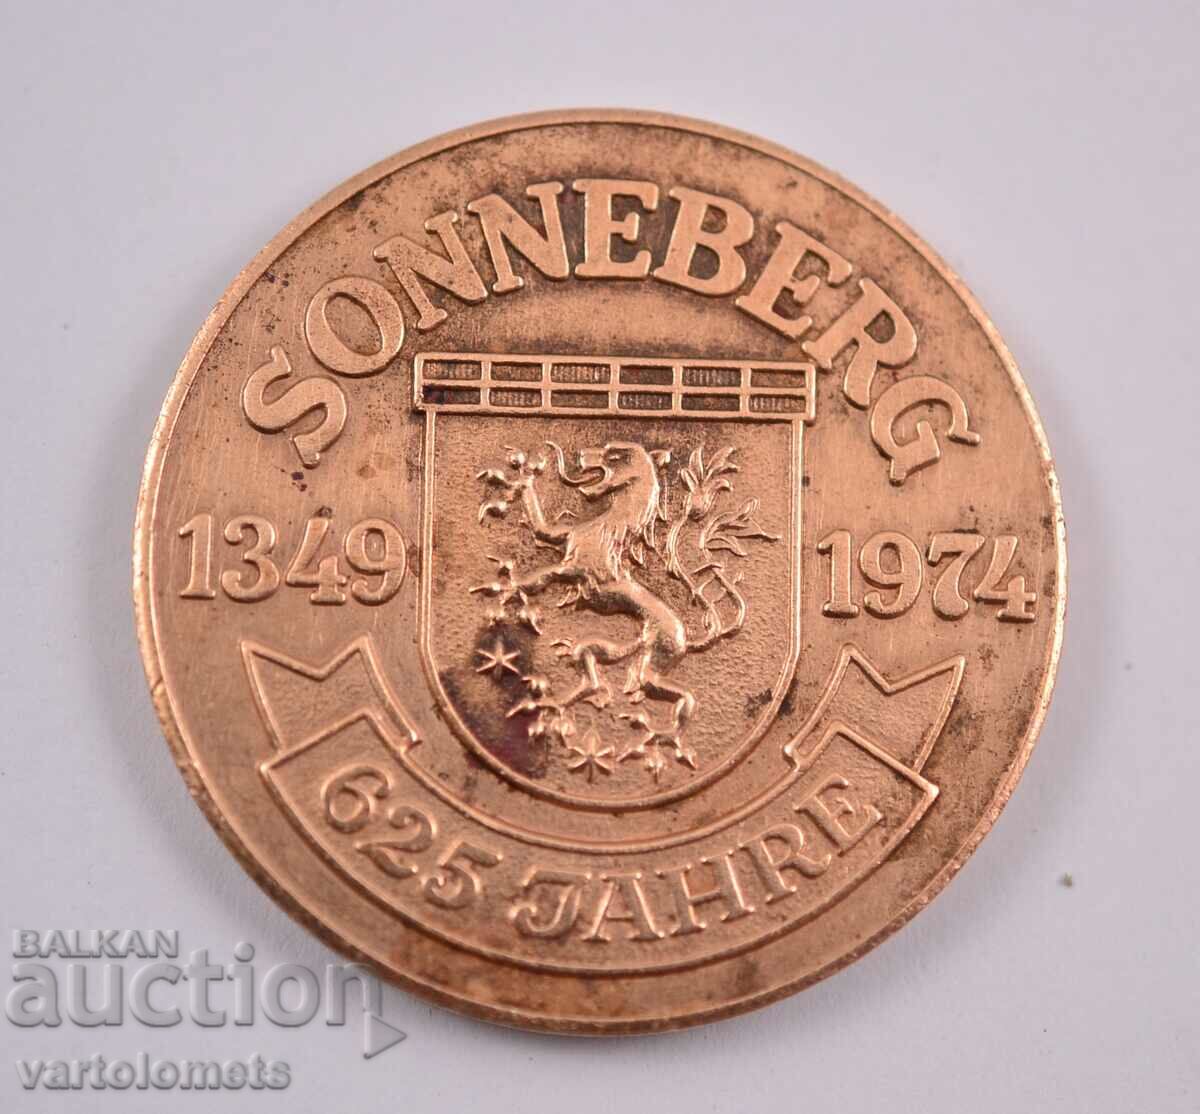 Placa - SONNEBERG 1349 - 1974